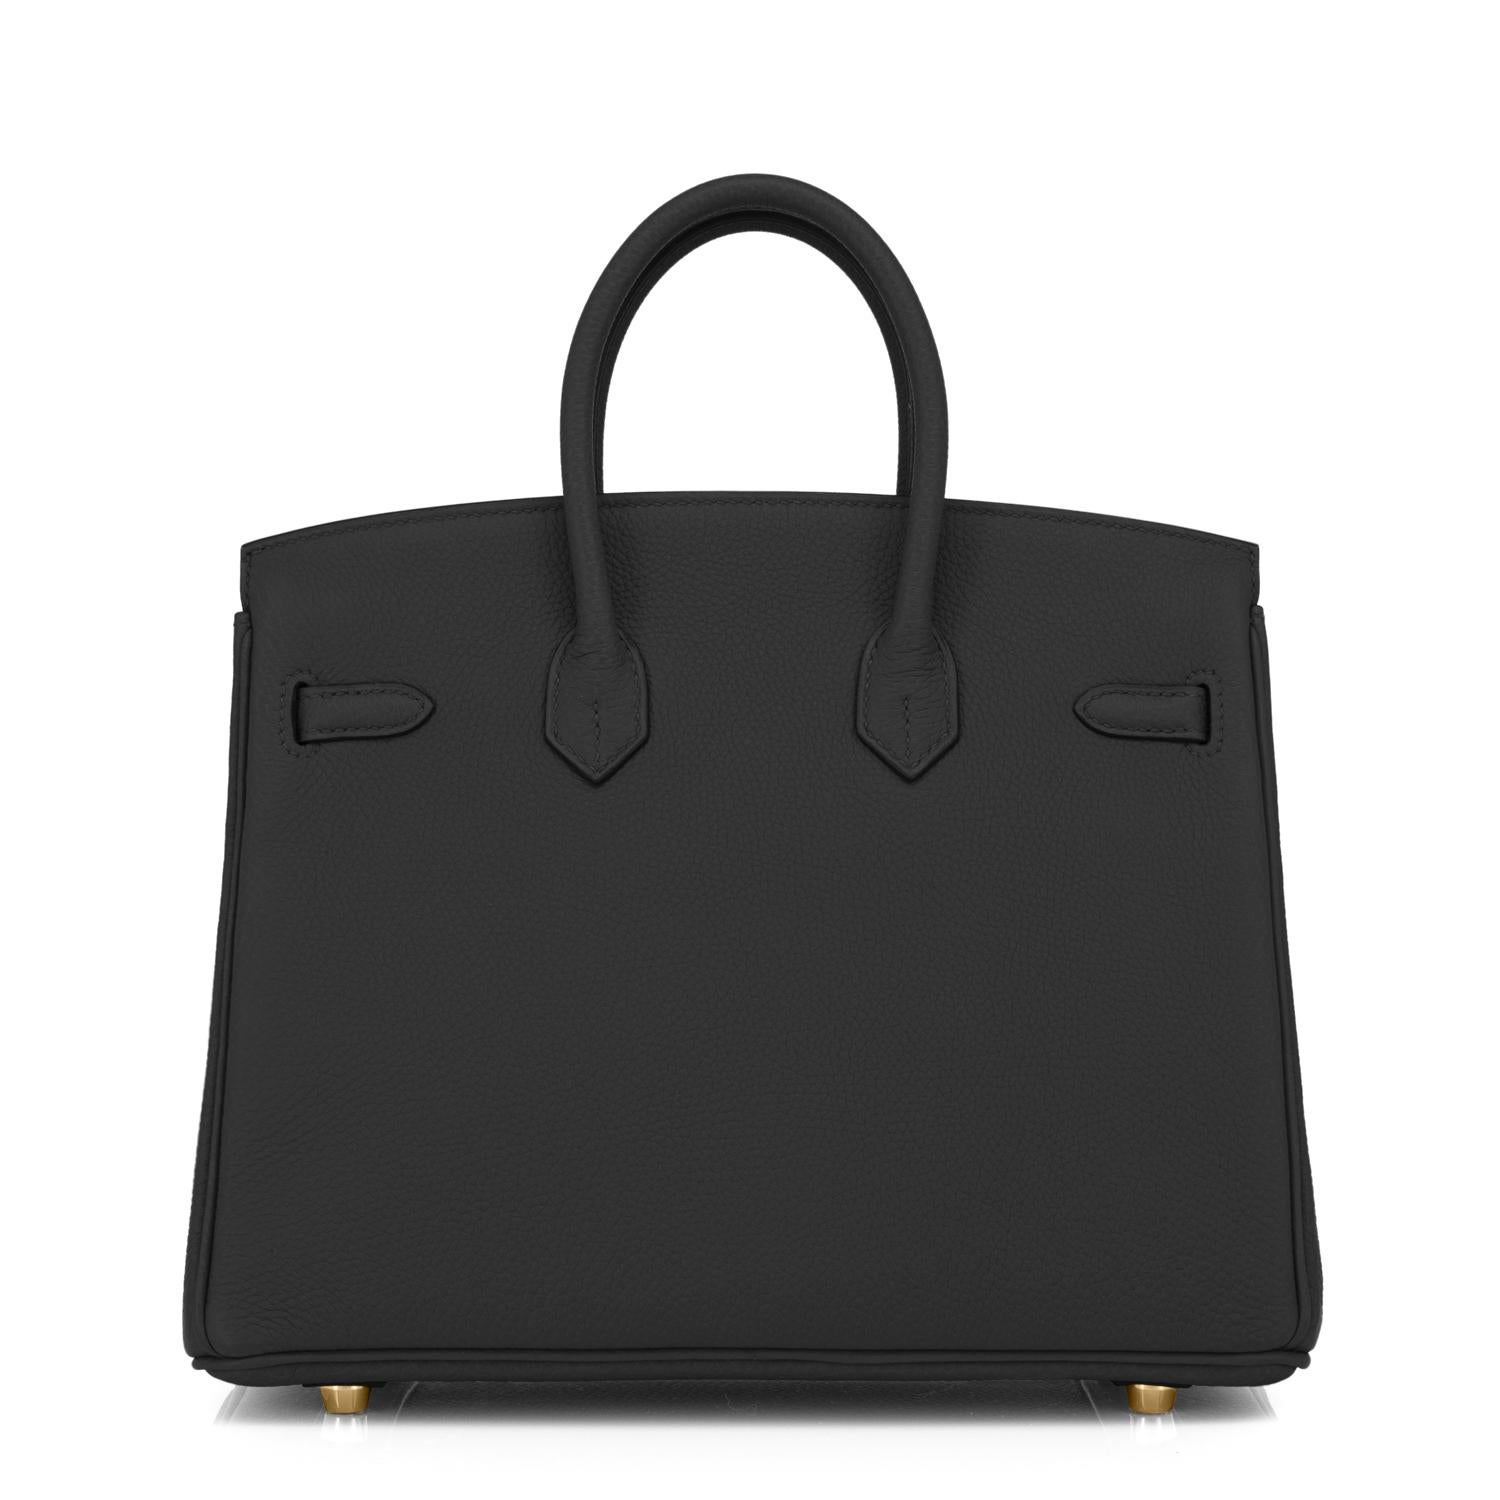 Hermes Birkin 25cm Black Togo Gold Hardware Bag Jewel NEW 2